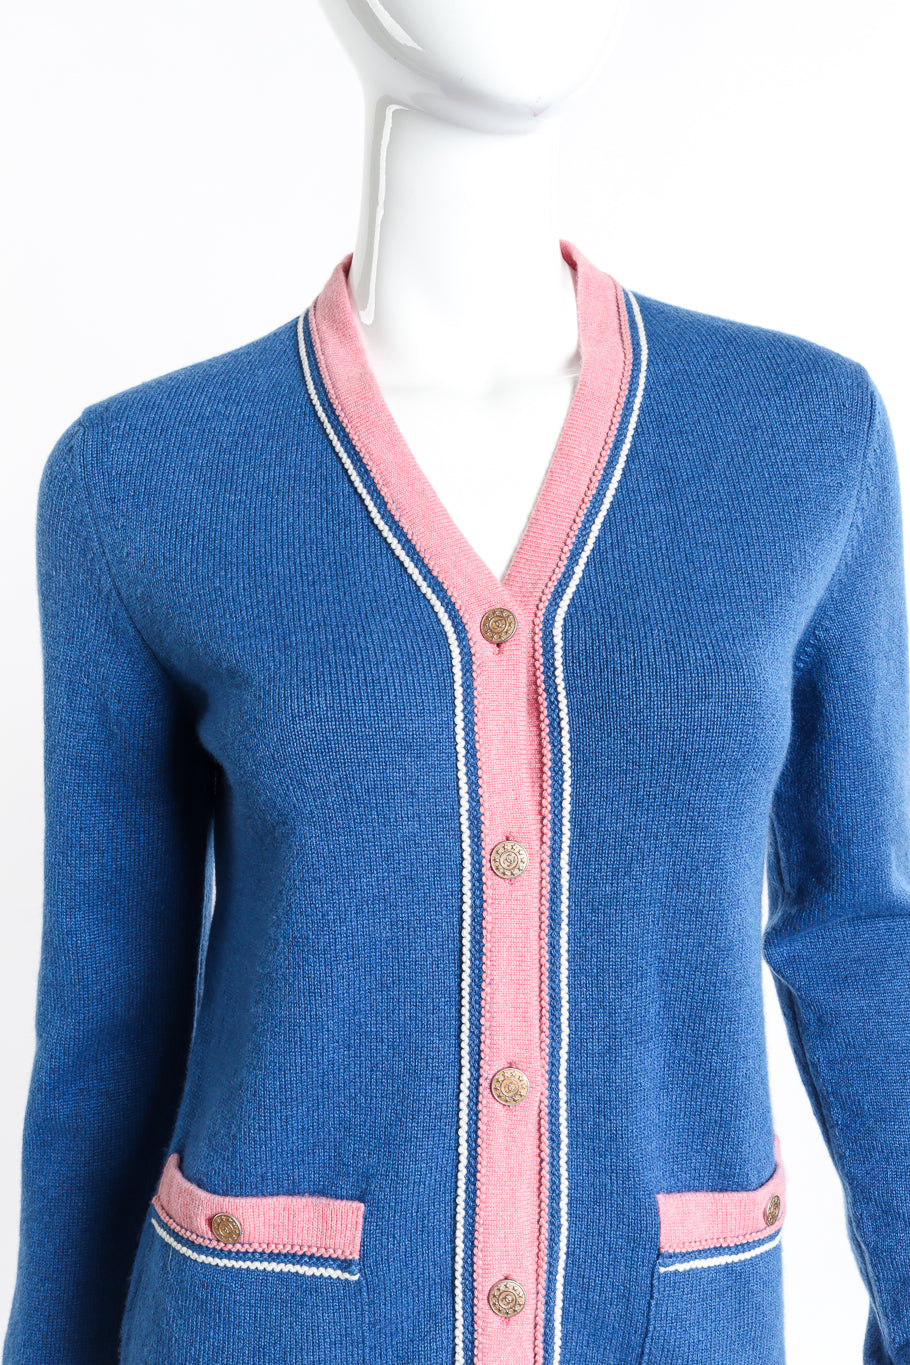 Chanel Cashmere Sweater front on mannequin closeup @recess la